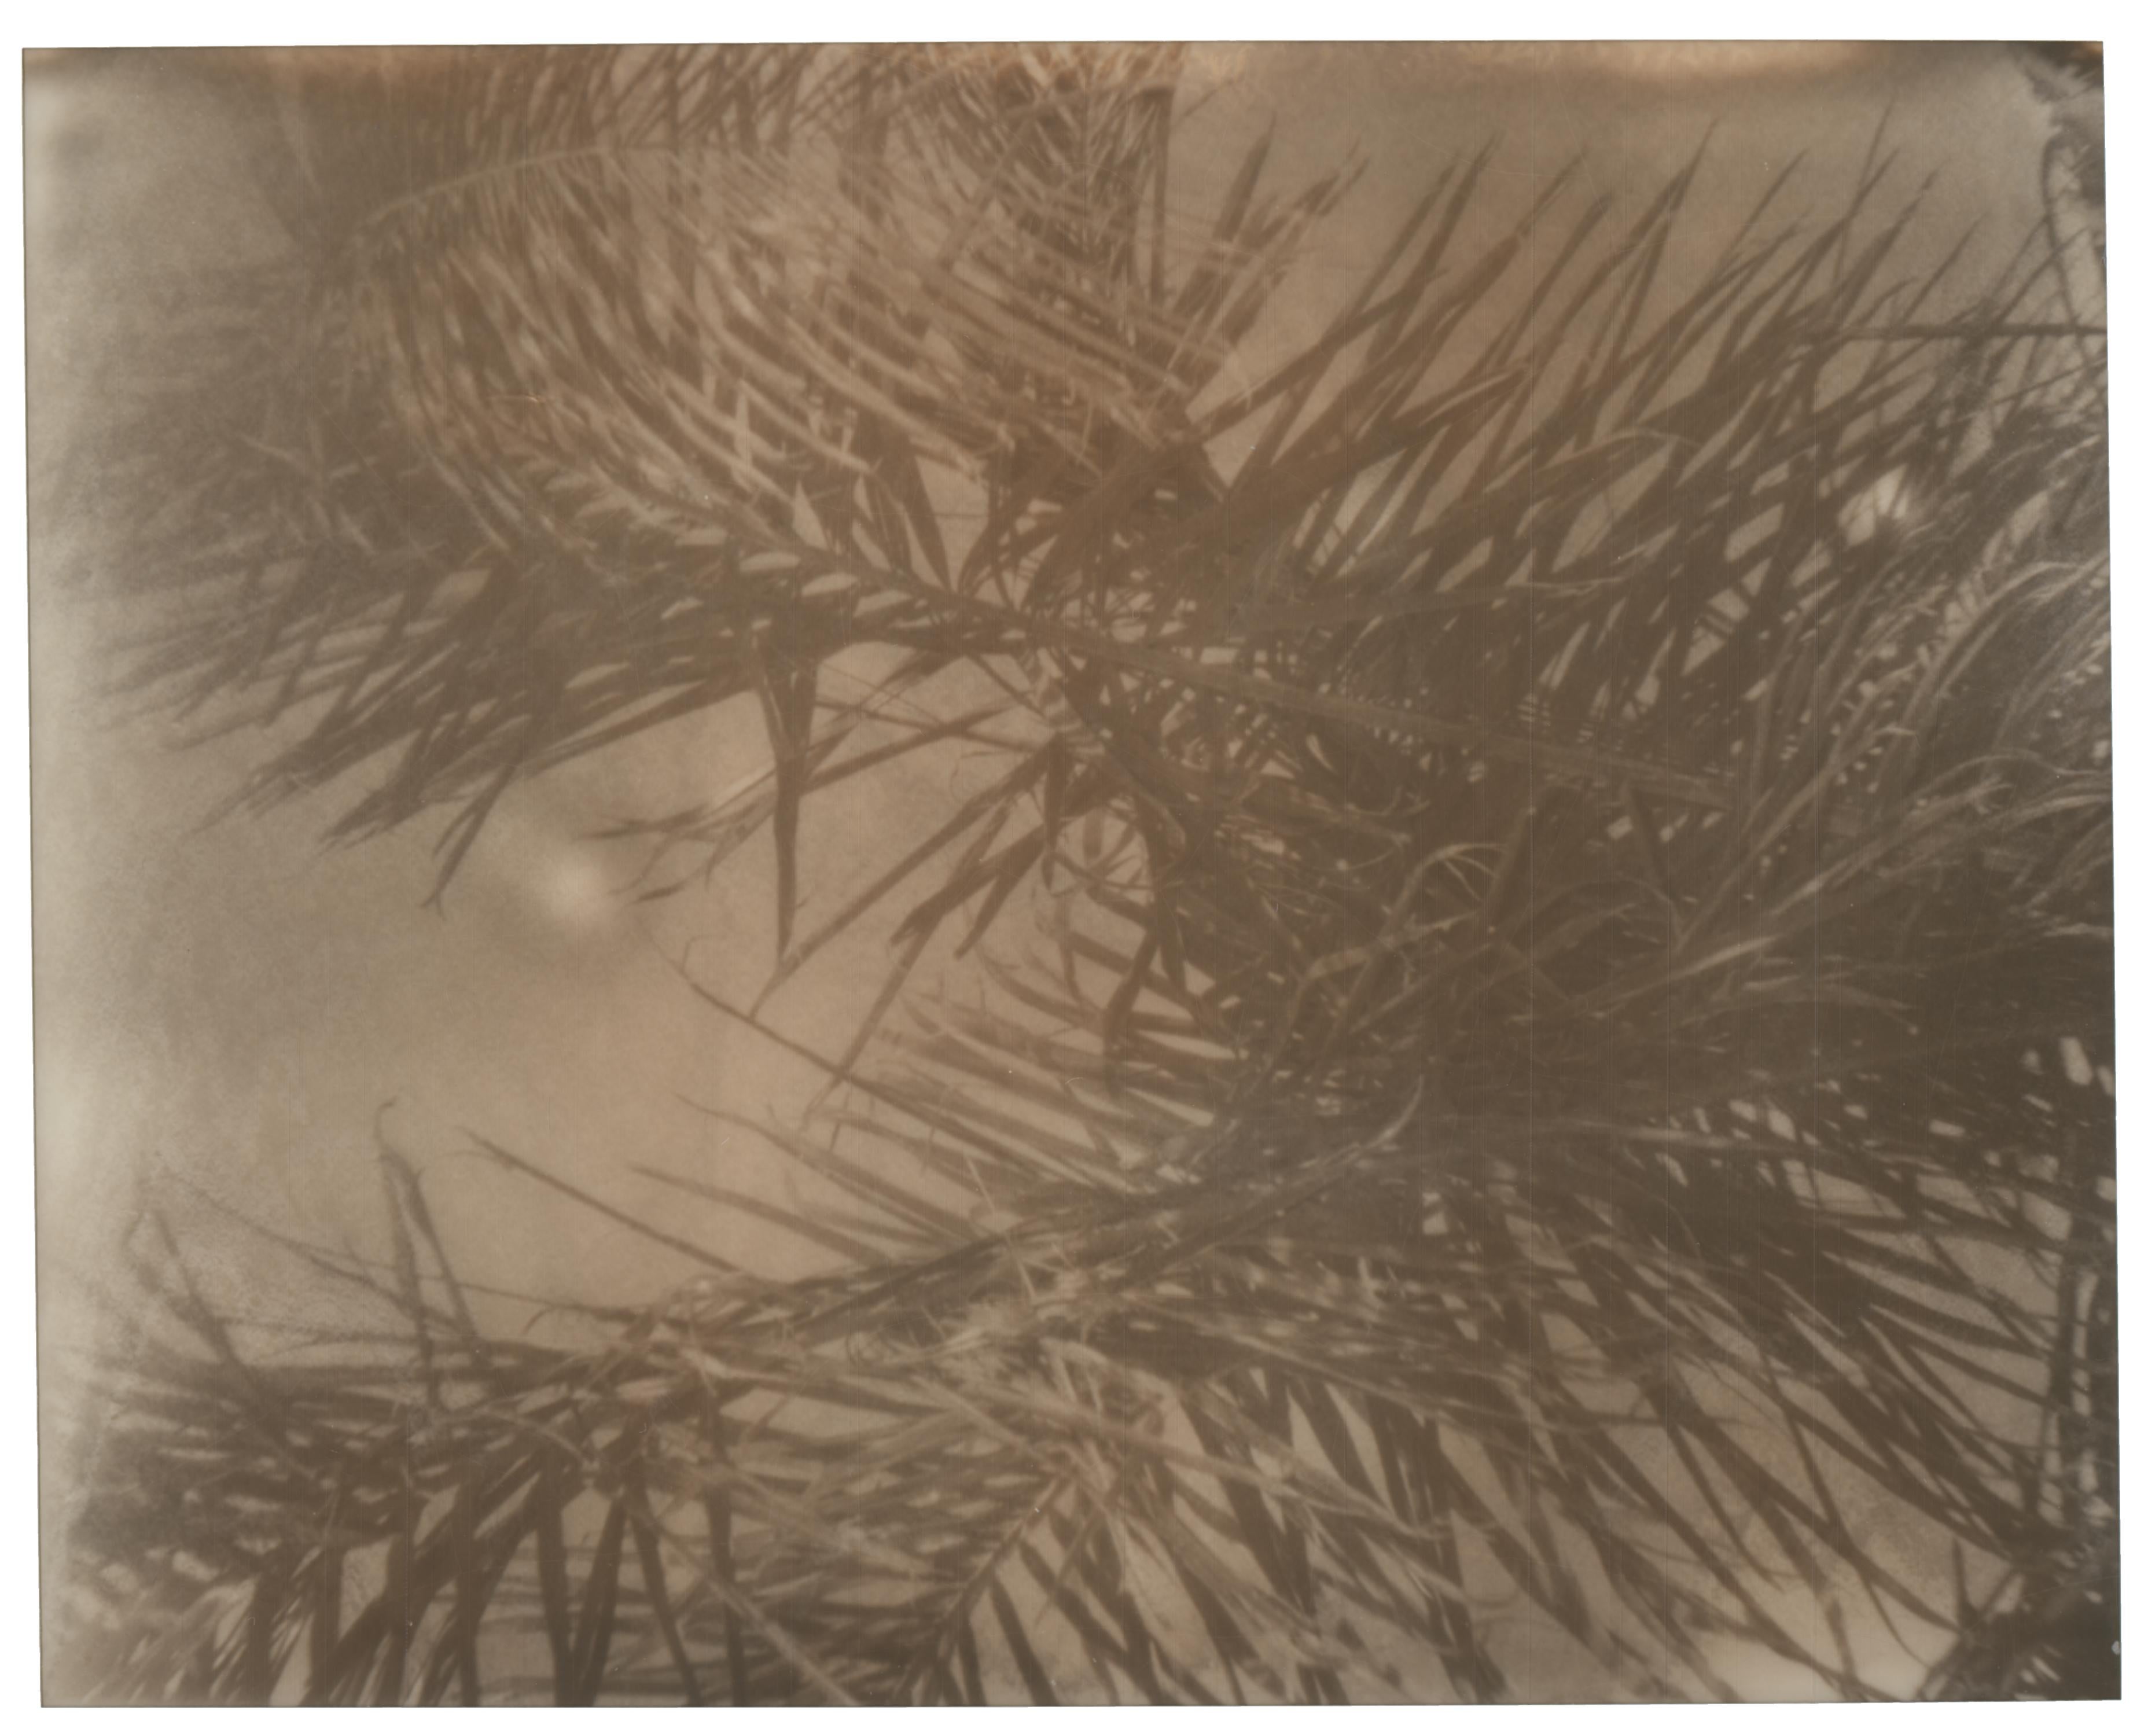 Stefanie Schneider Color Photograph - Palm Frond (Life on Mars) - 21st Century, Polaroid, Contemporary, Landscape